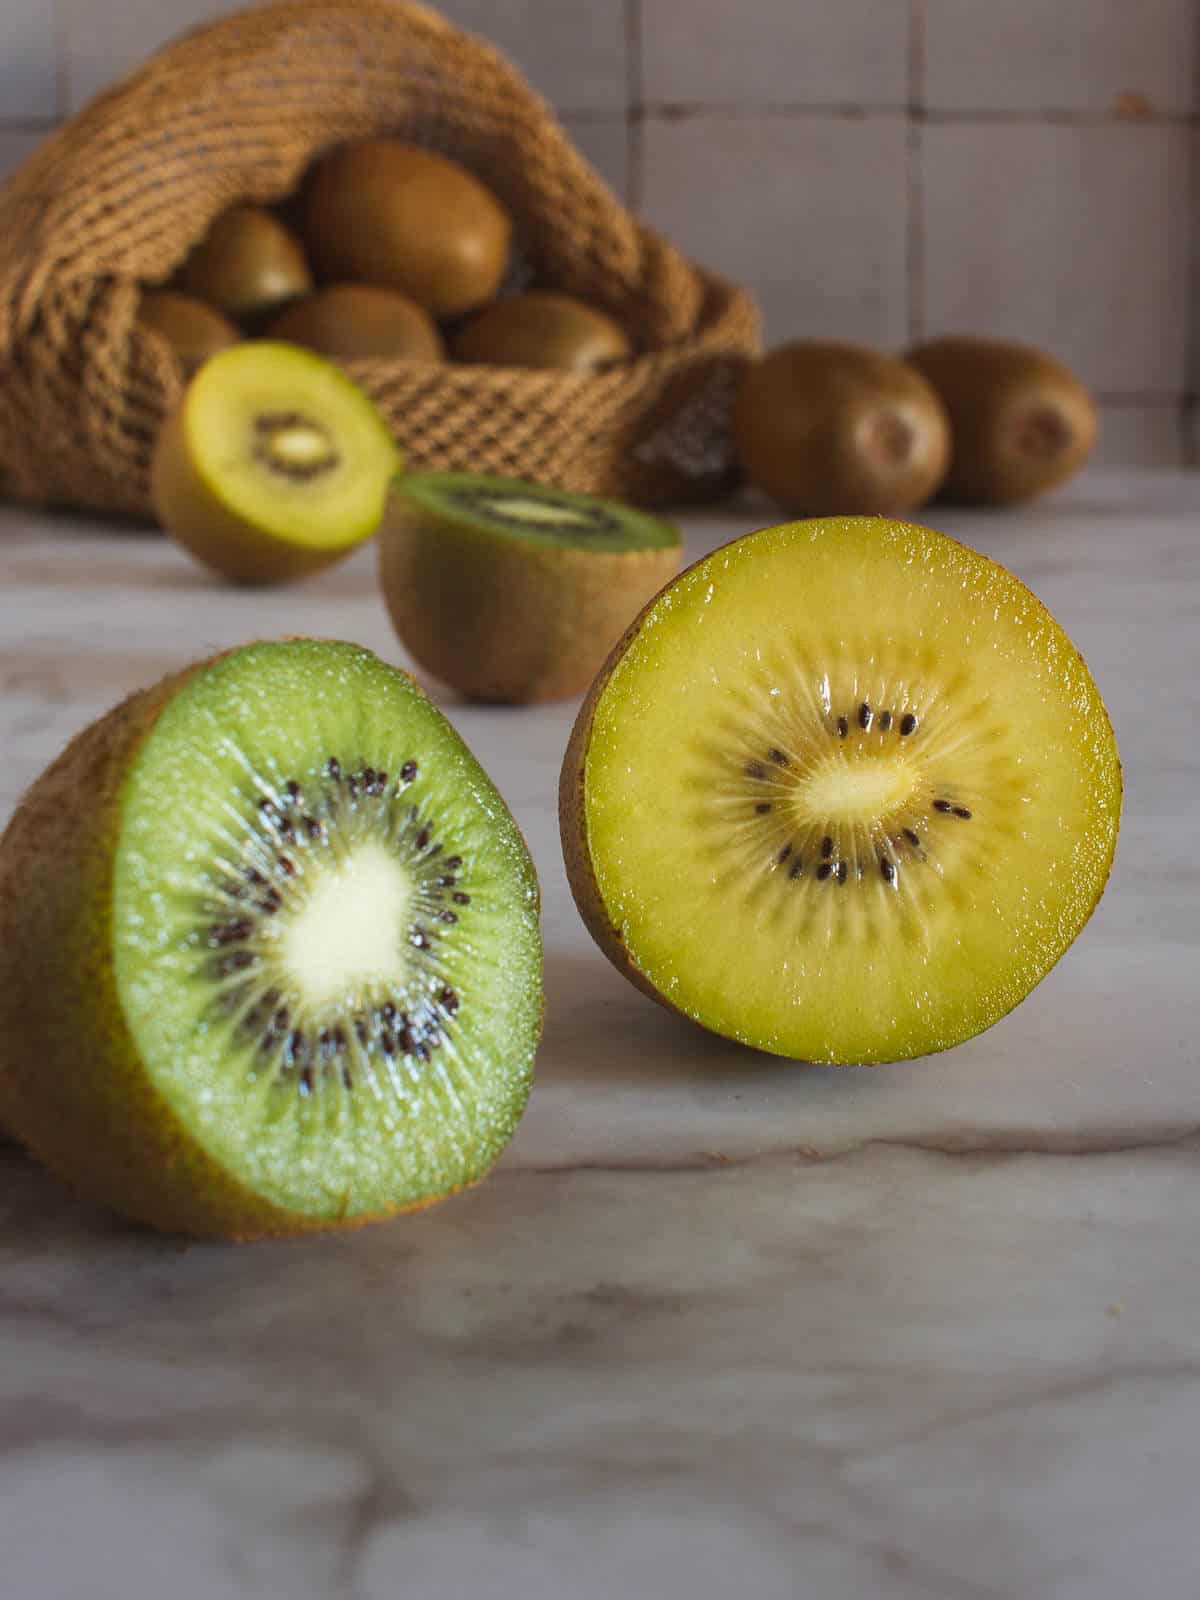 green and yellow kiwi fruits halved.